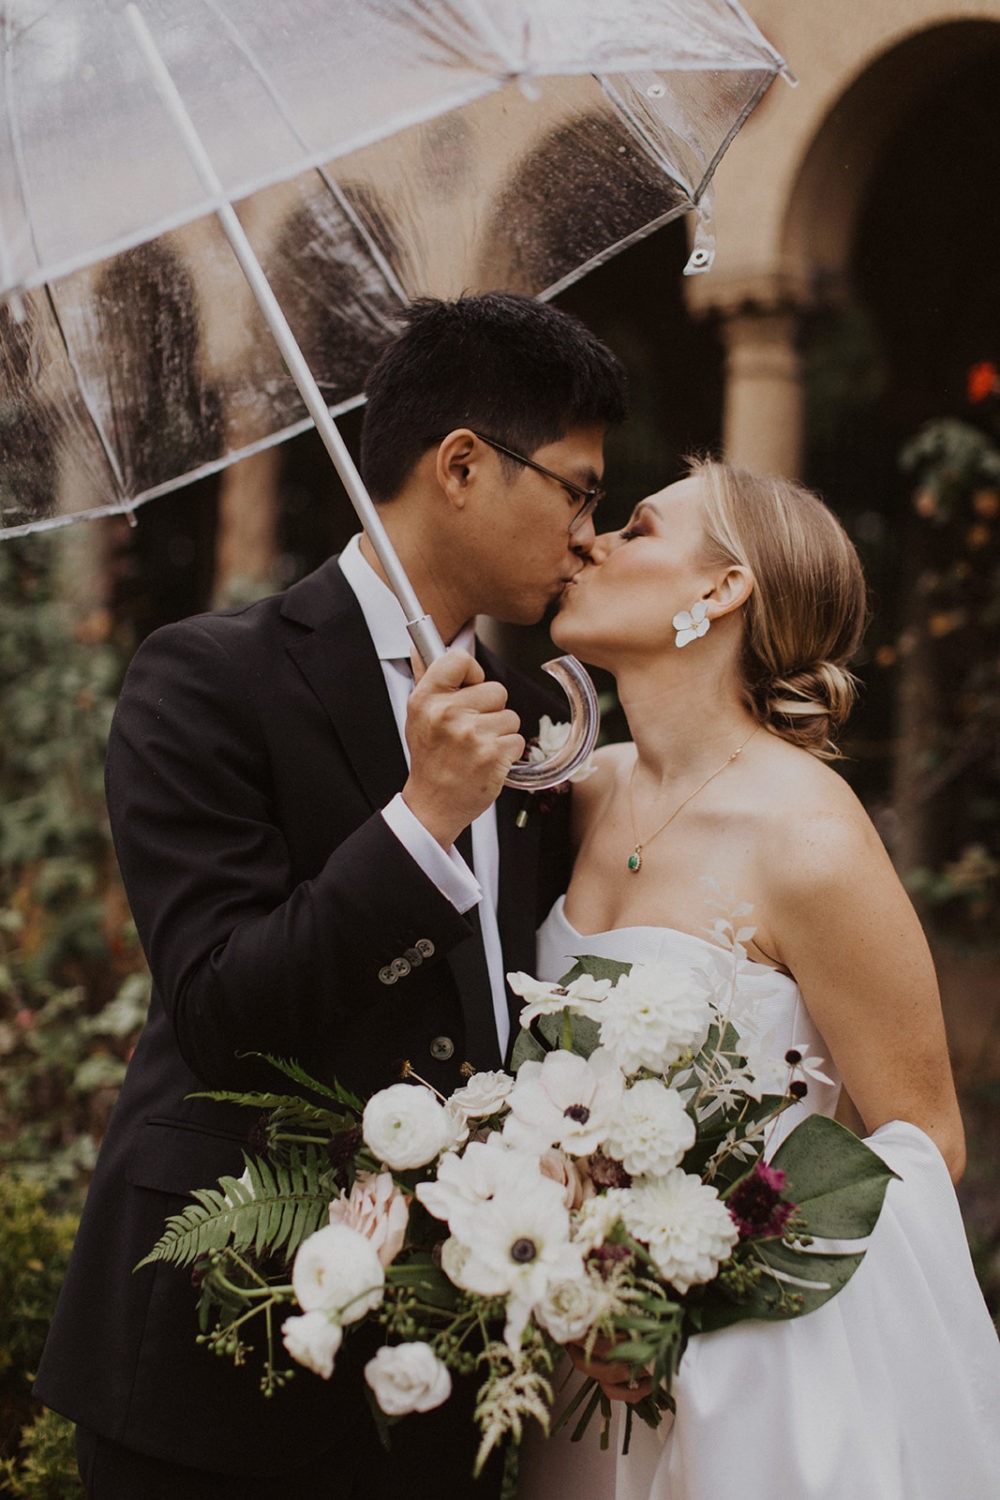 Couple kisses under clear umbrella at rainy wedding day